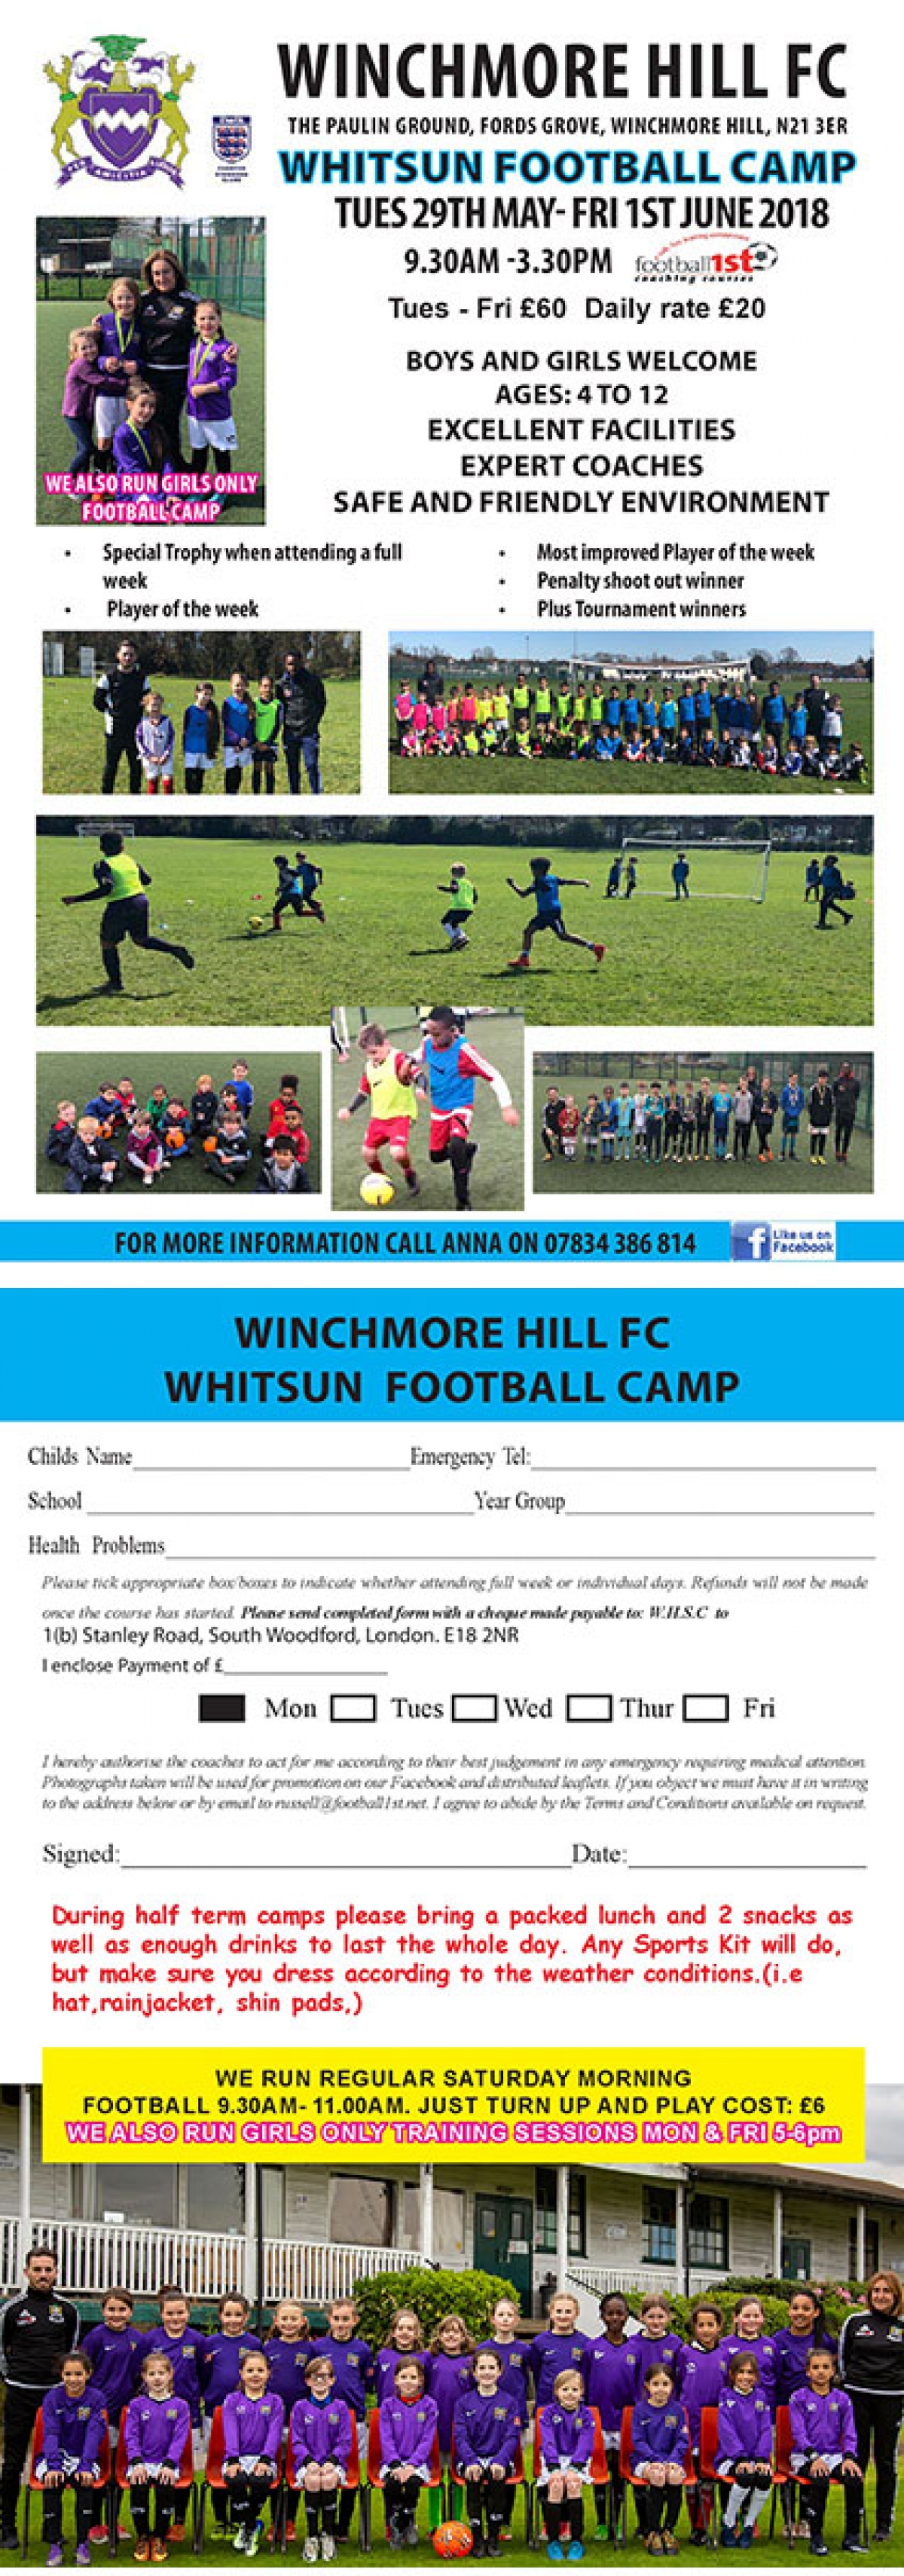 Whitsun Football Camp 2018